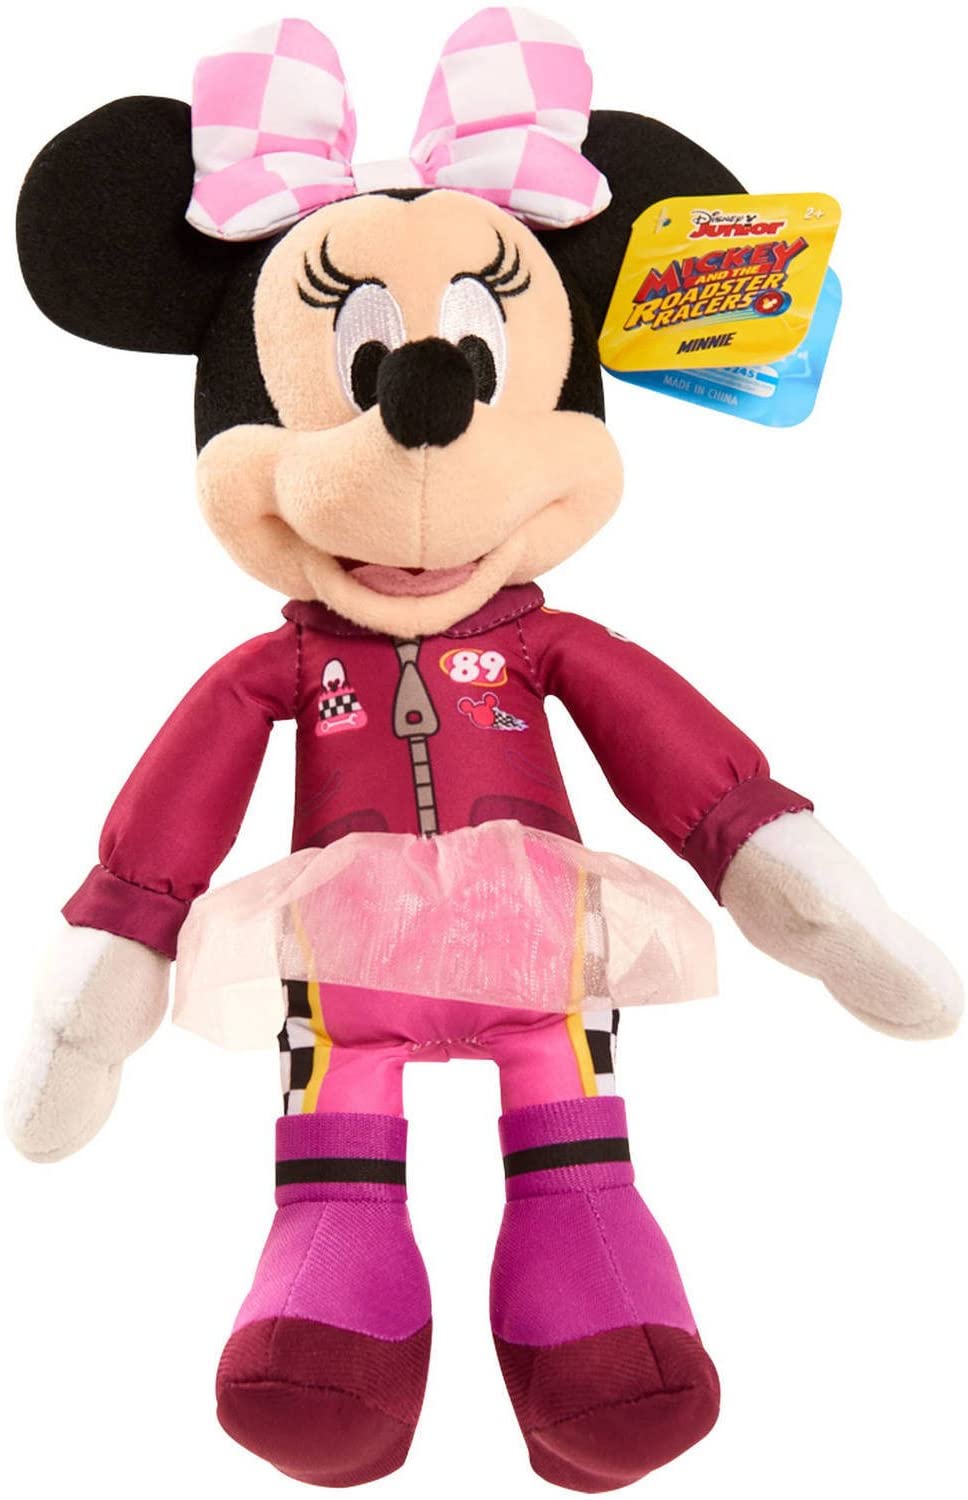 Mickey Mouse Roadster Crew Plush (Mickey, Donald, Daisy, Goofy, Minnie Racer) 9 inchs